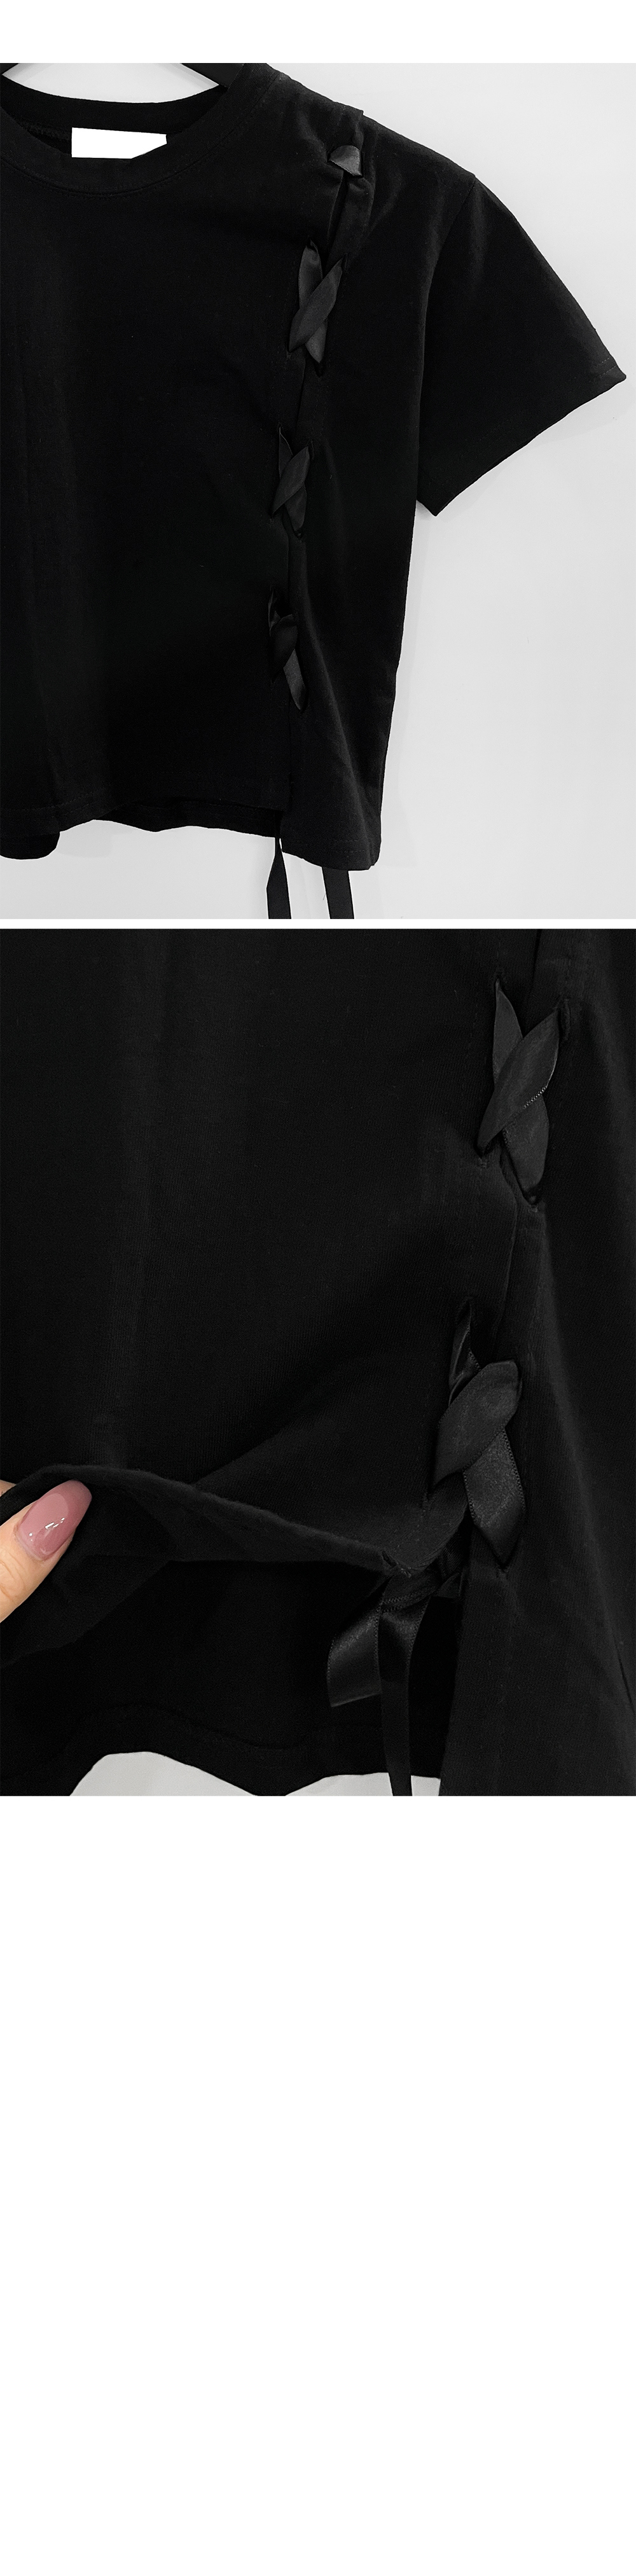 short sleeved tee detail image-S1L9